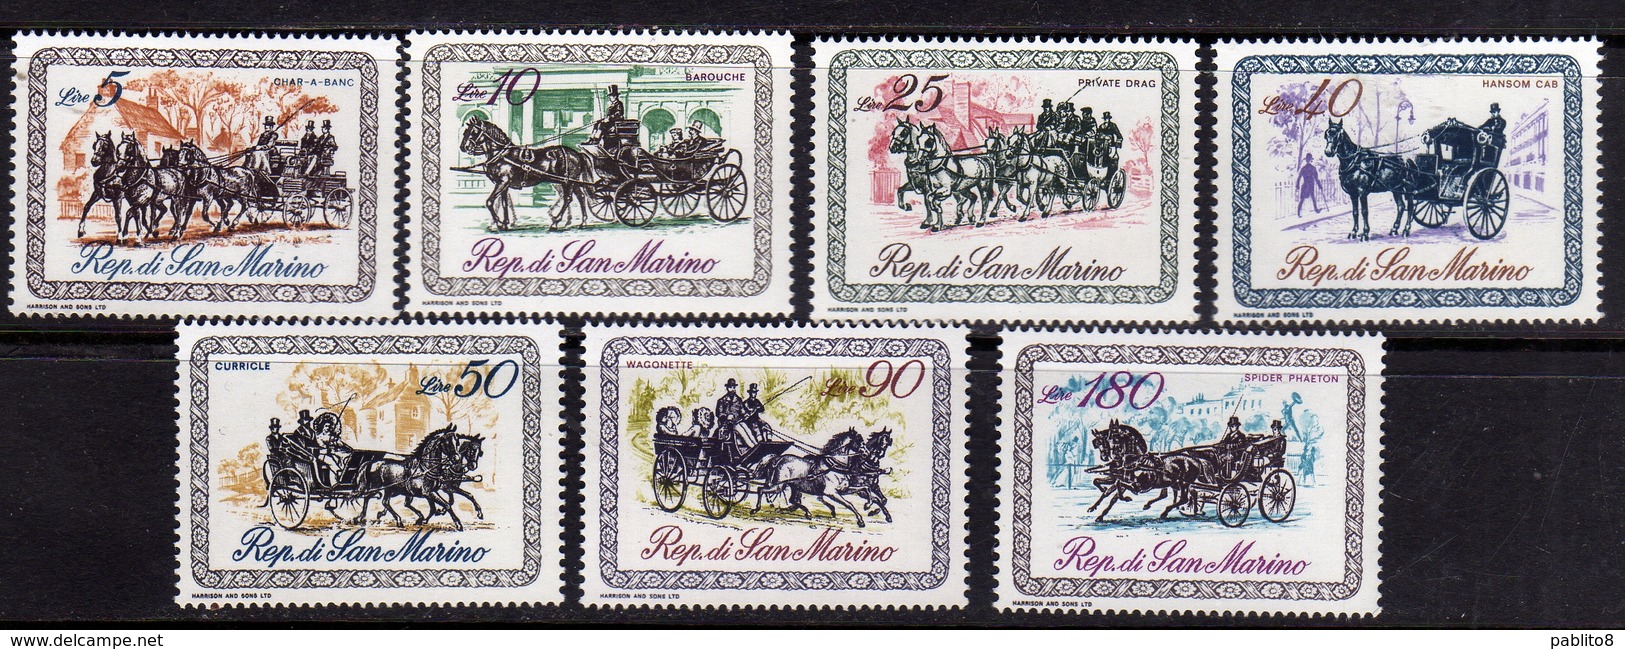 REPUBBLICA DI SAN MARINO 1969 CARROZZE CARRIAGES SERIE COMPLETA COMPLETE SET MNH - Unused Stamps